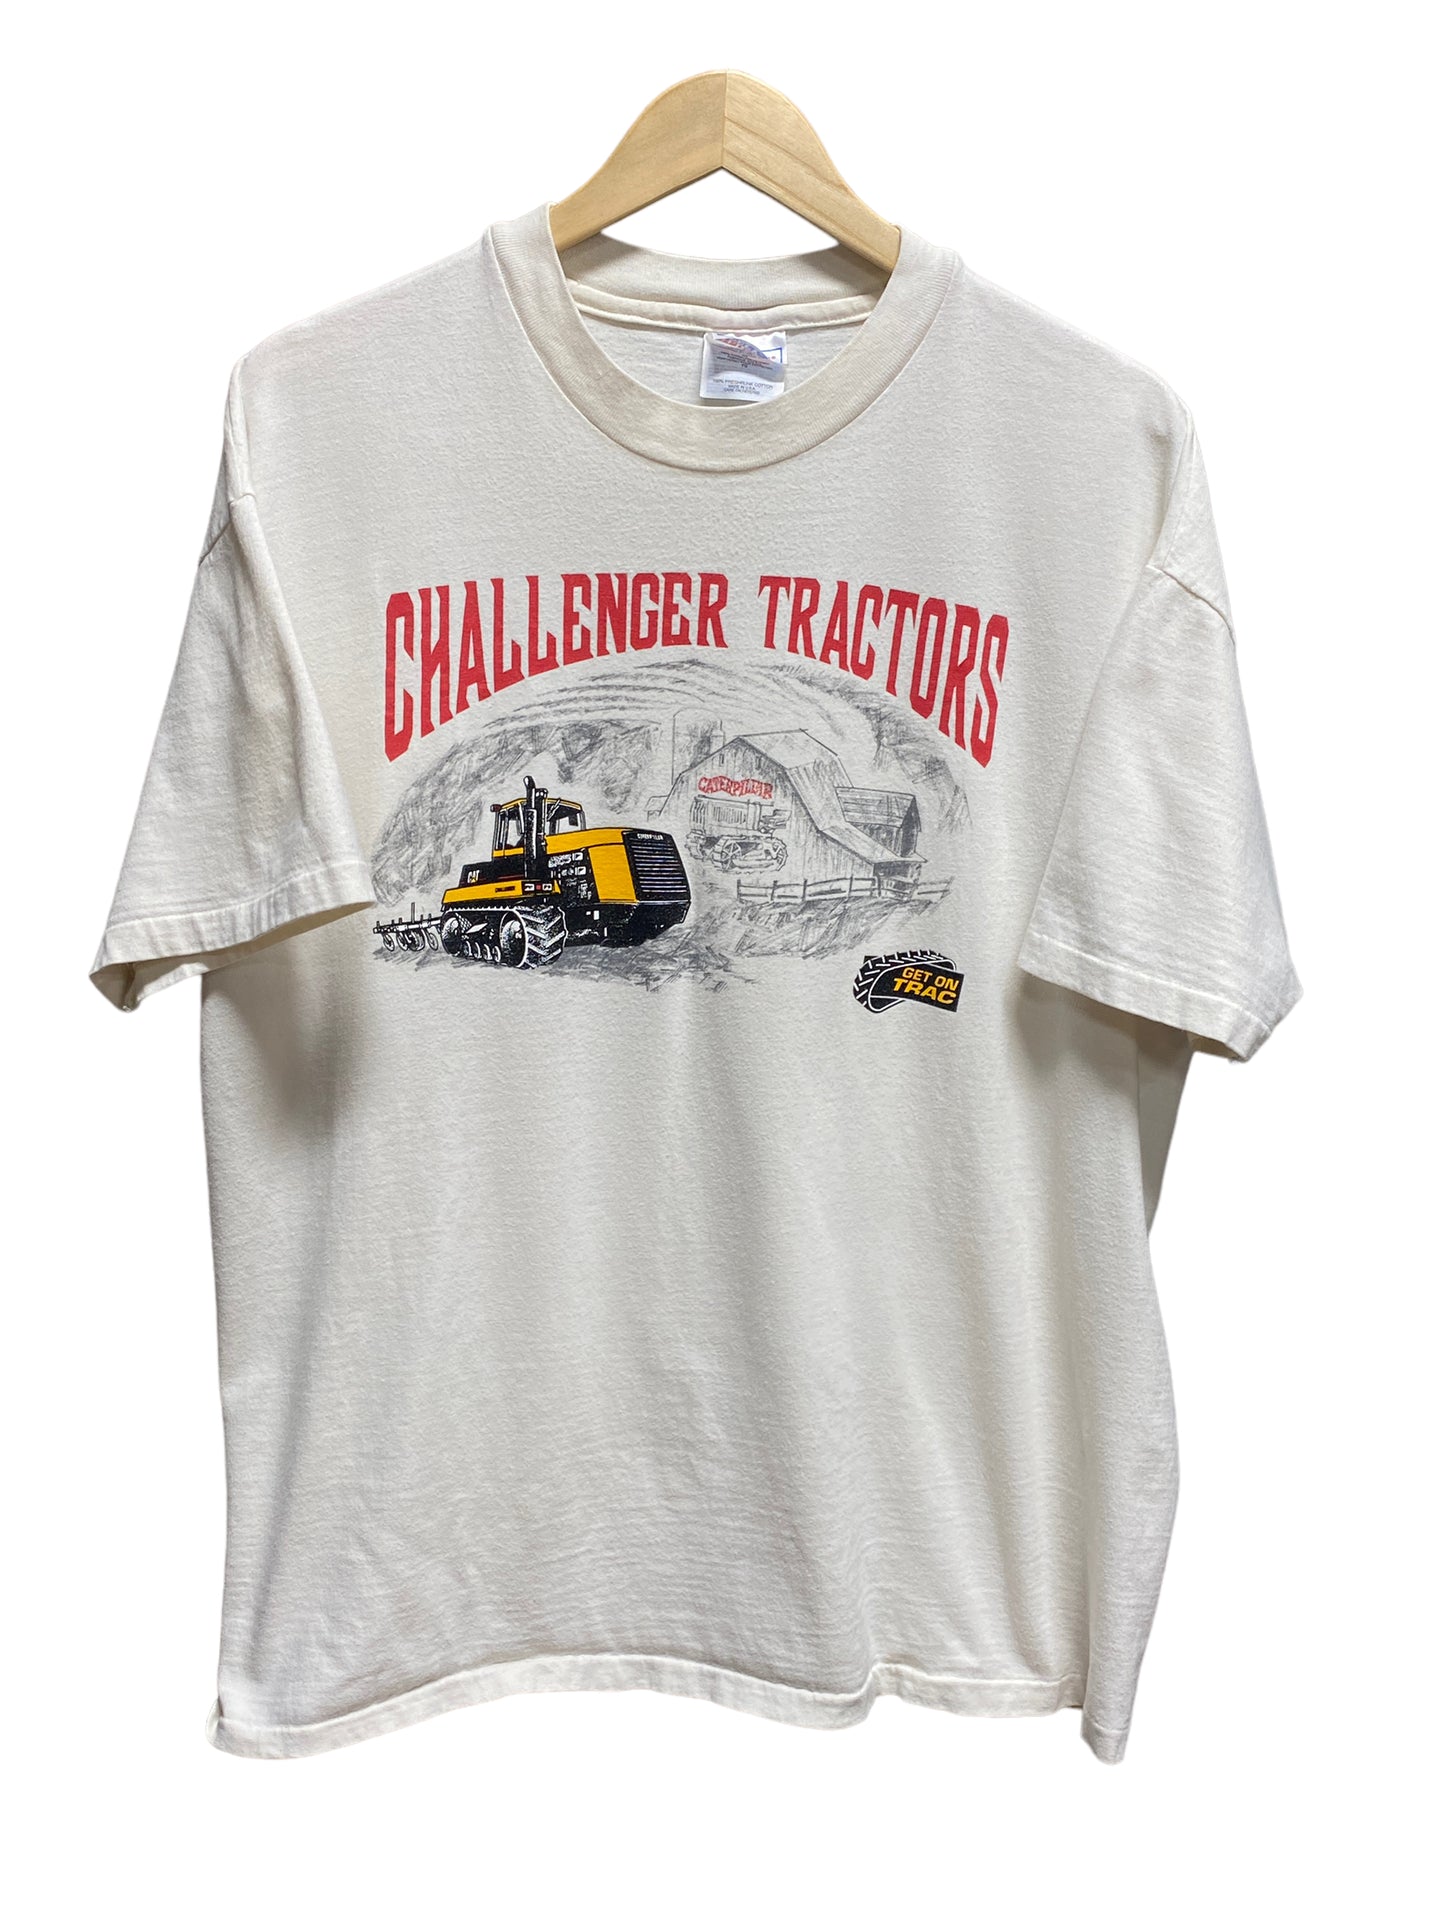 Vintage 90's Caterpillar Challenge Tractors Graphic Tee Size XL